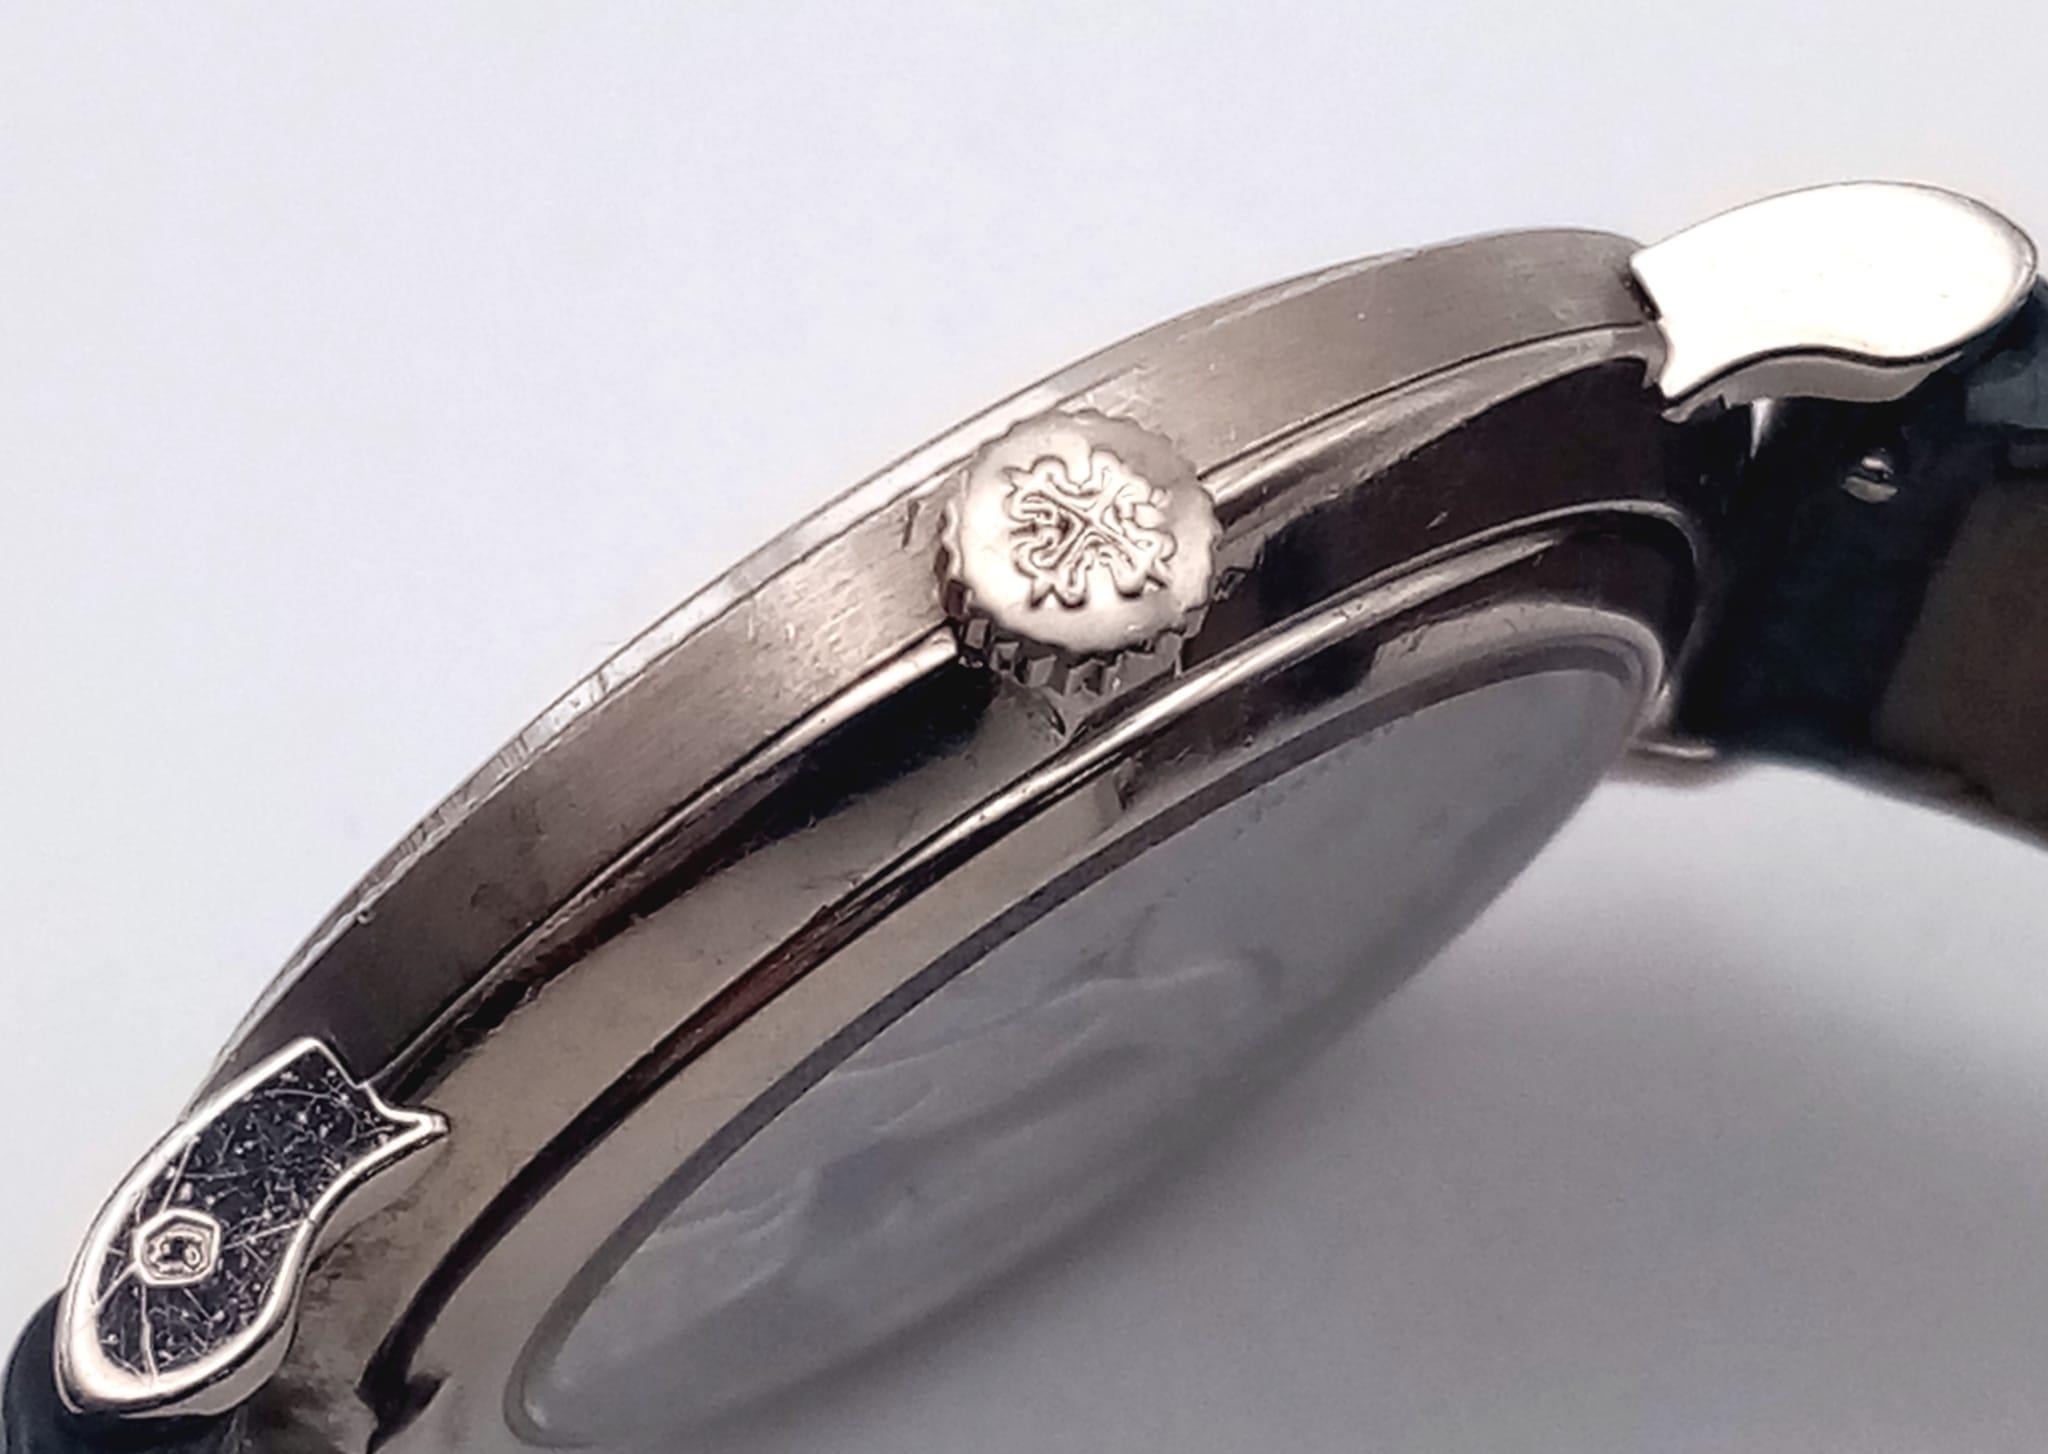 A Patek Phillipe Calatrava 18K White Gold Gents Watch. Leather strap. Gold case - 31mm. Mechanical - Image 7 of 10